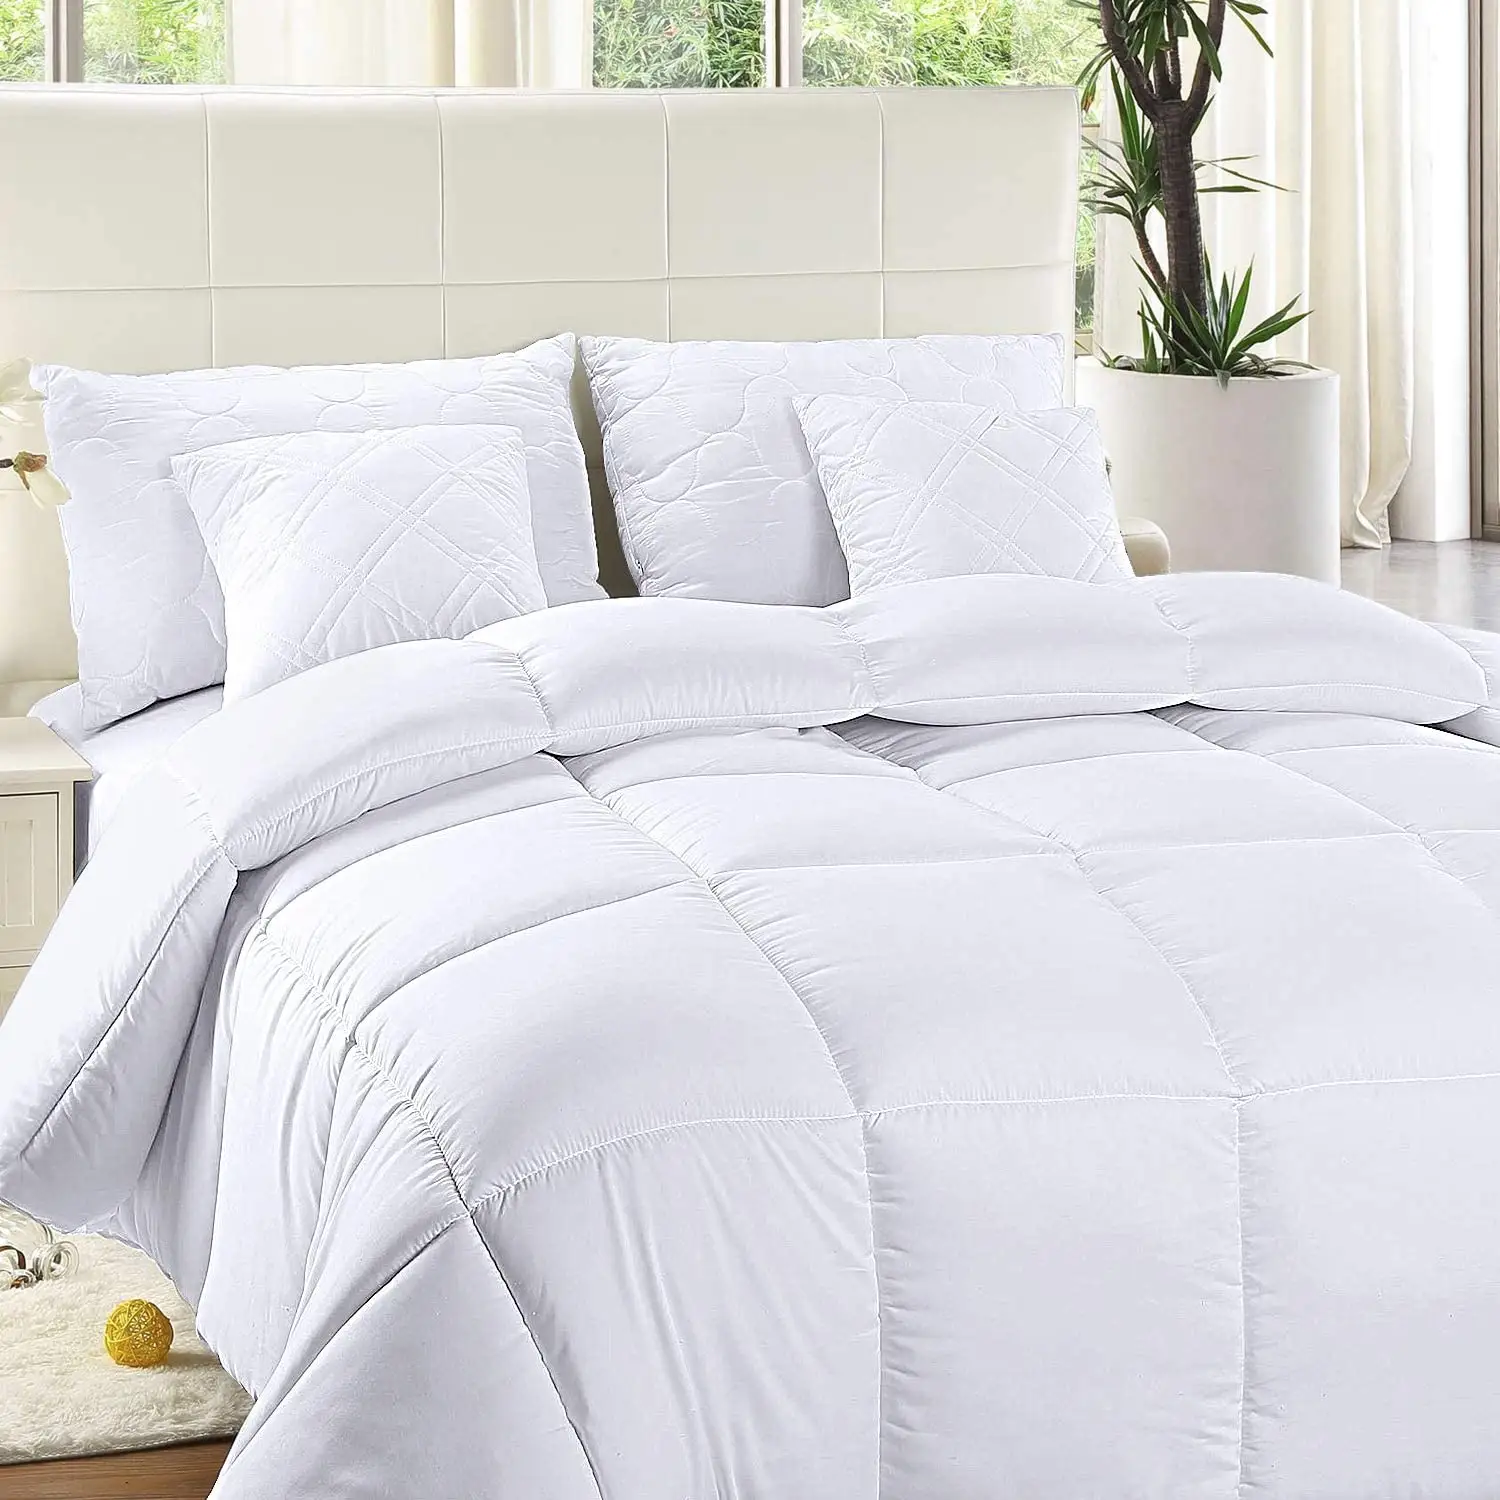 Hotel cheap 100%polyester wholesale hotel duvet cover/comforter sheet sets